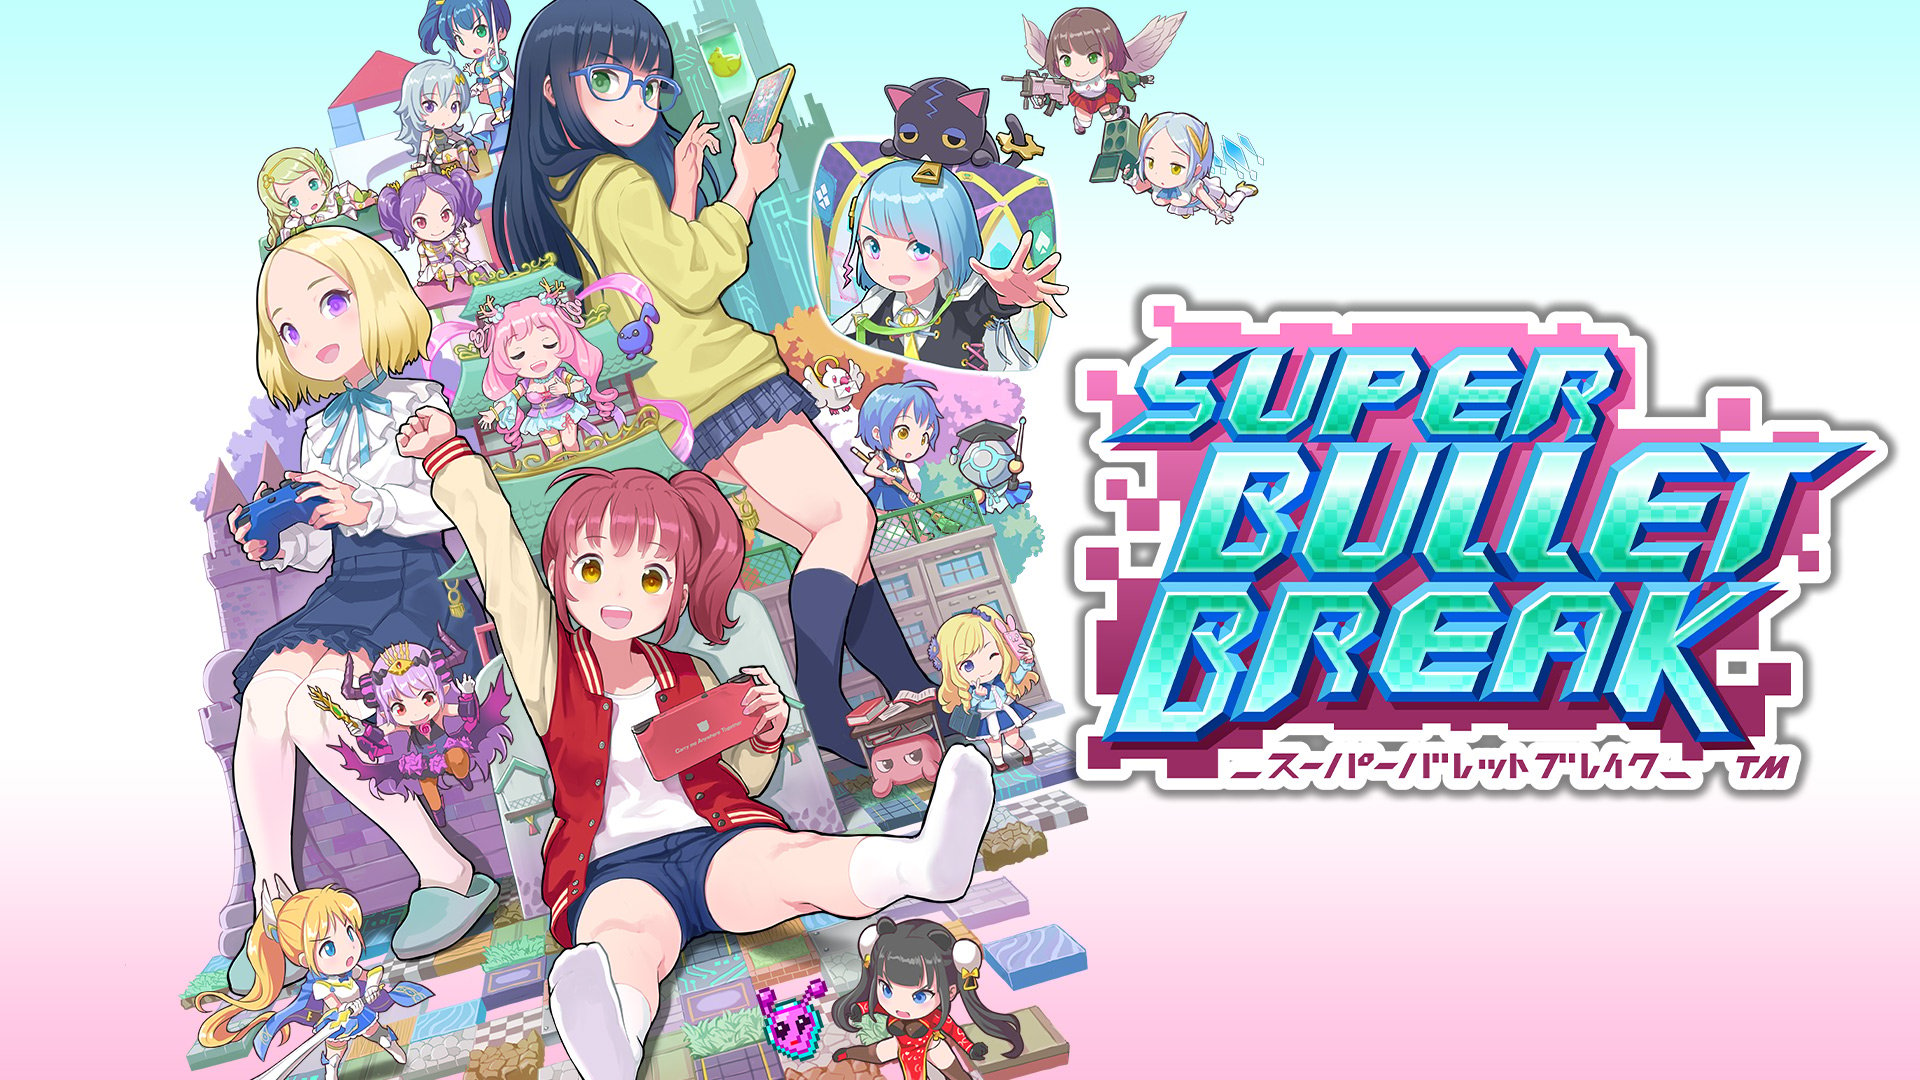 #
      Anime-inspired roguelite deckbuilder Super Bullet Break announced for PS4, Switch, and PC